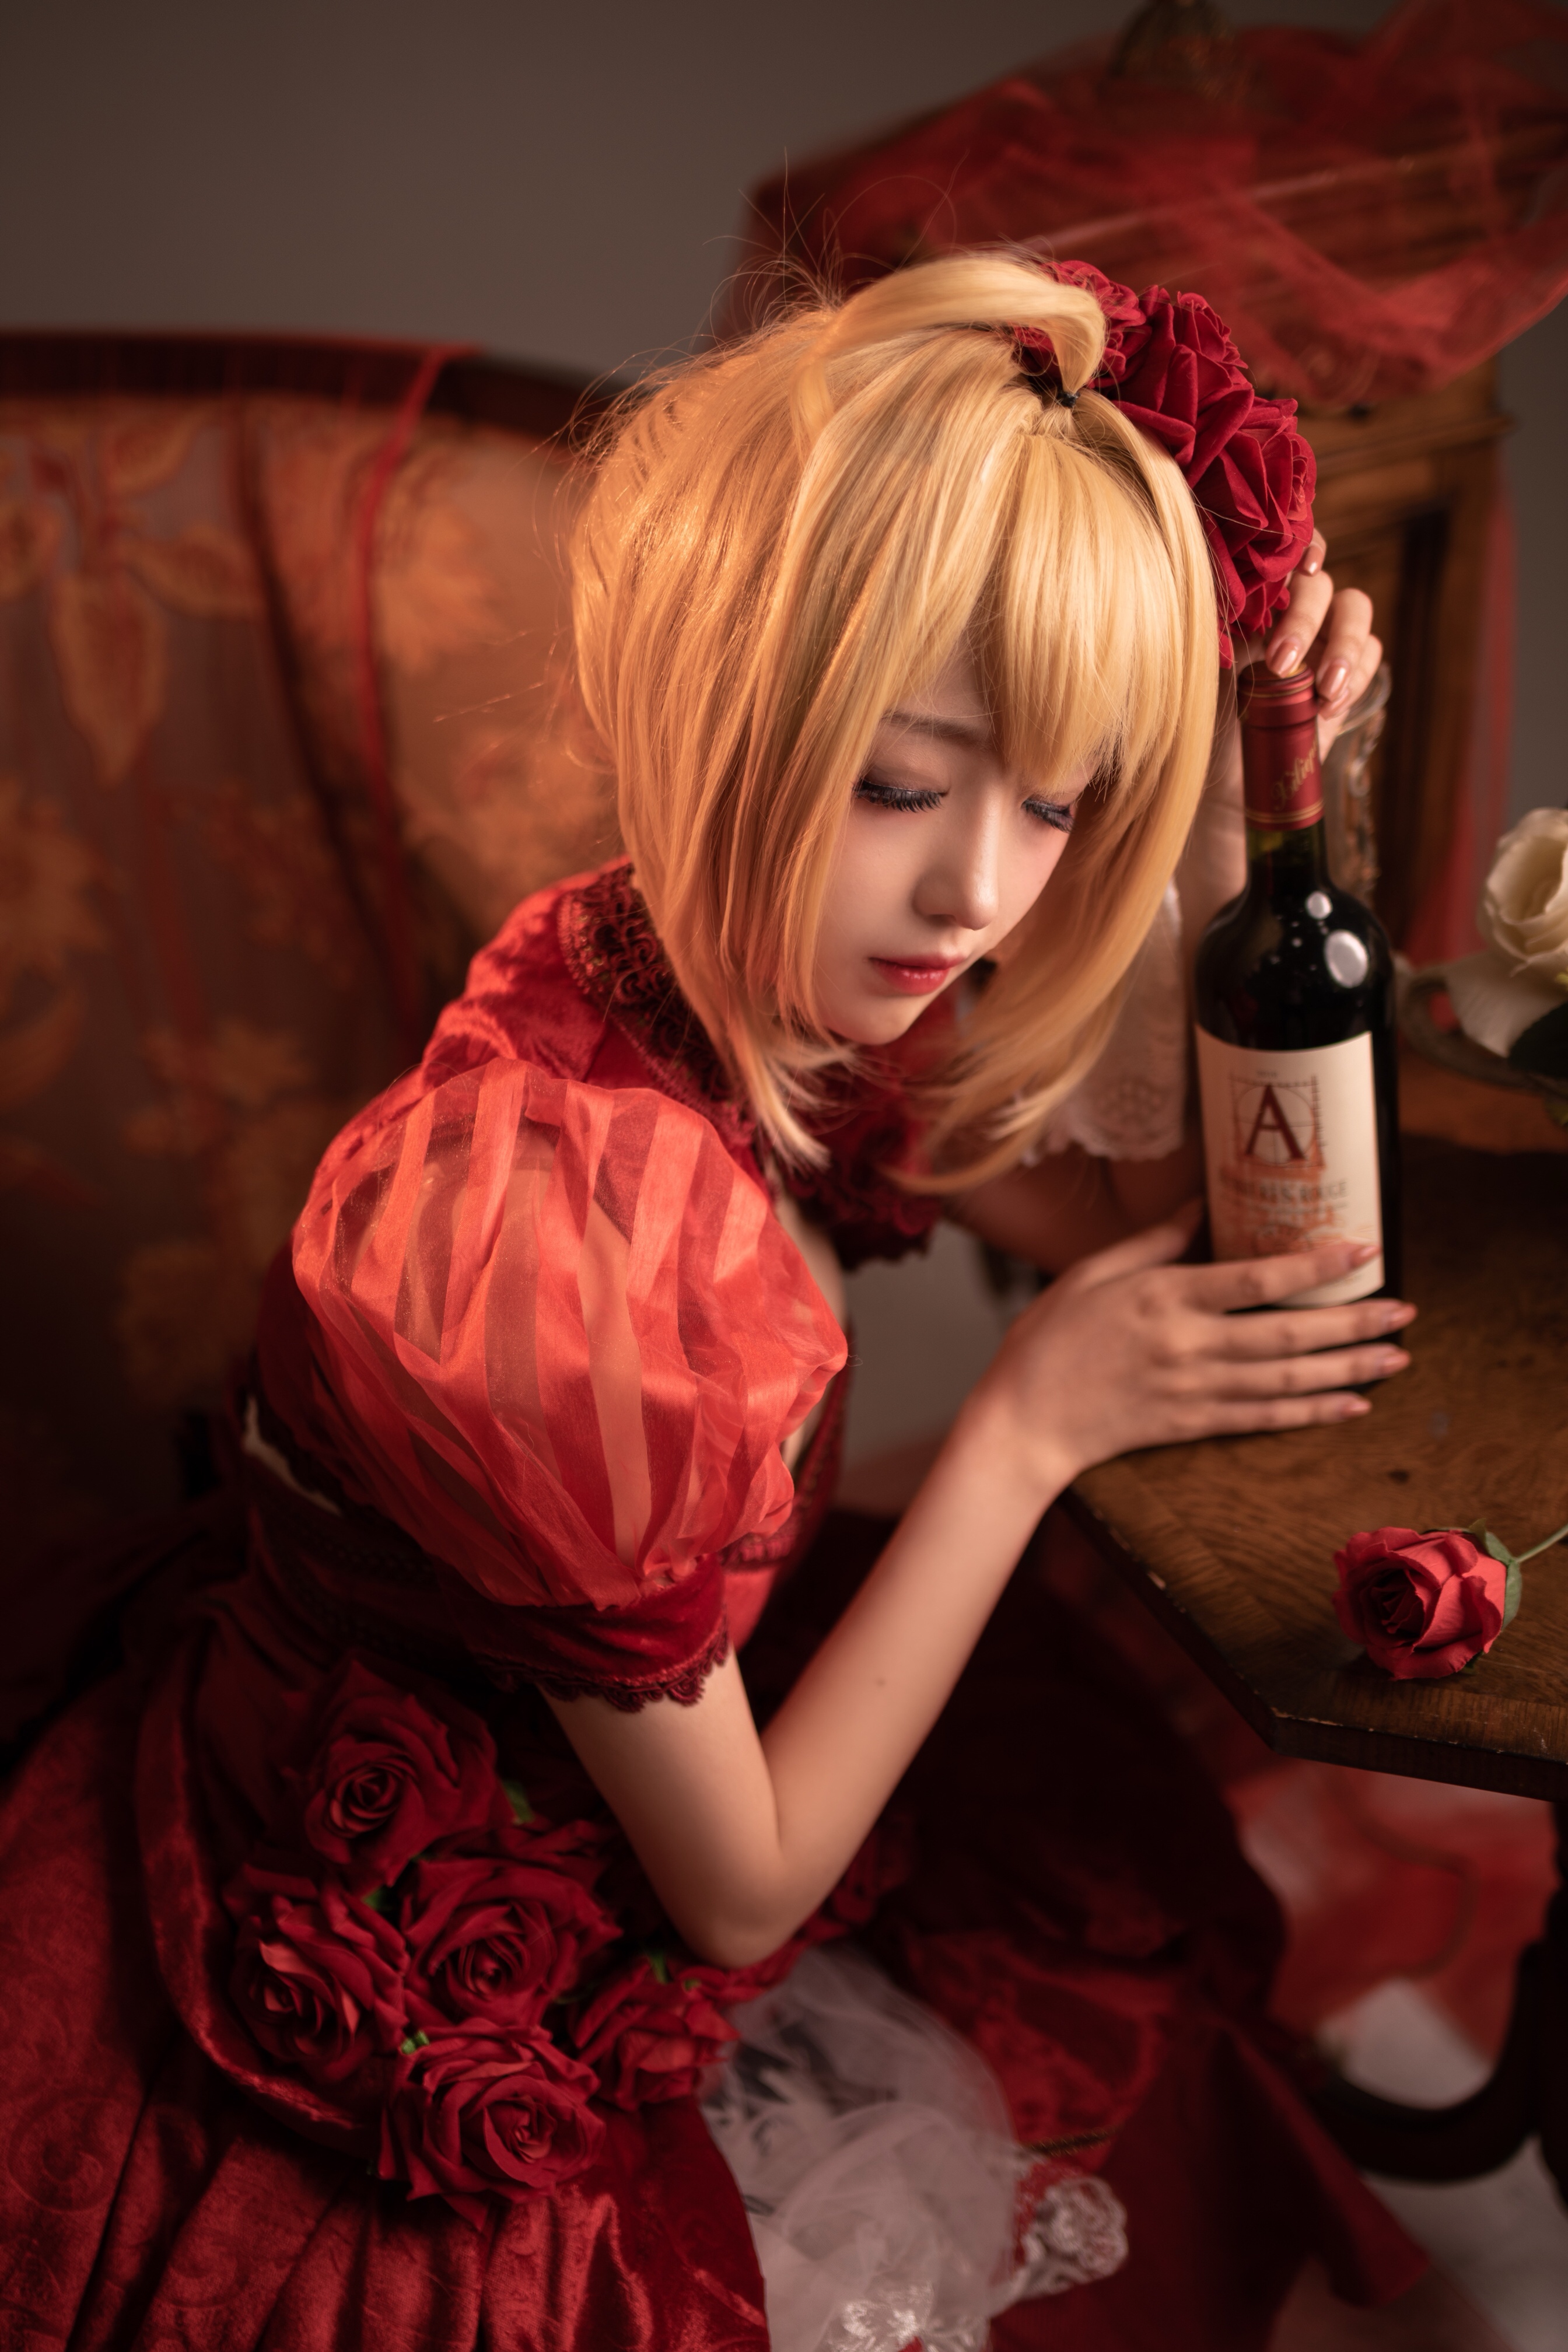 Asian Blonde Lolita Chair Retro Theme Red Wine Shika XiaoLu 2688x4032